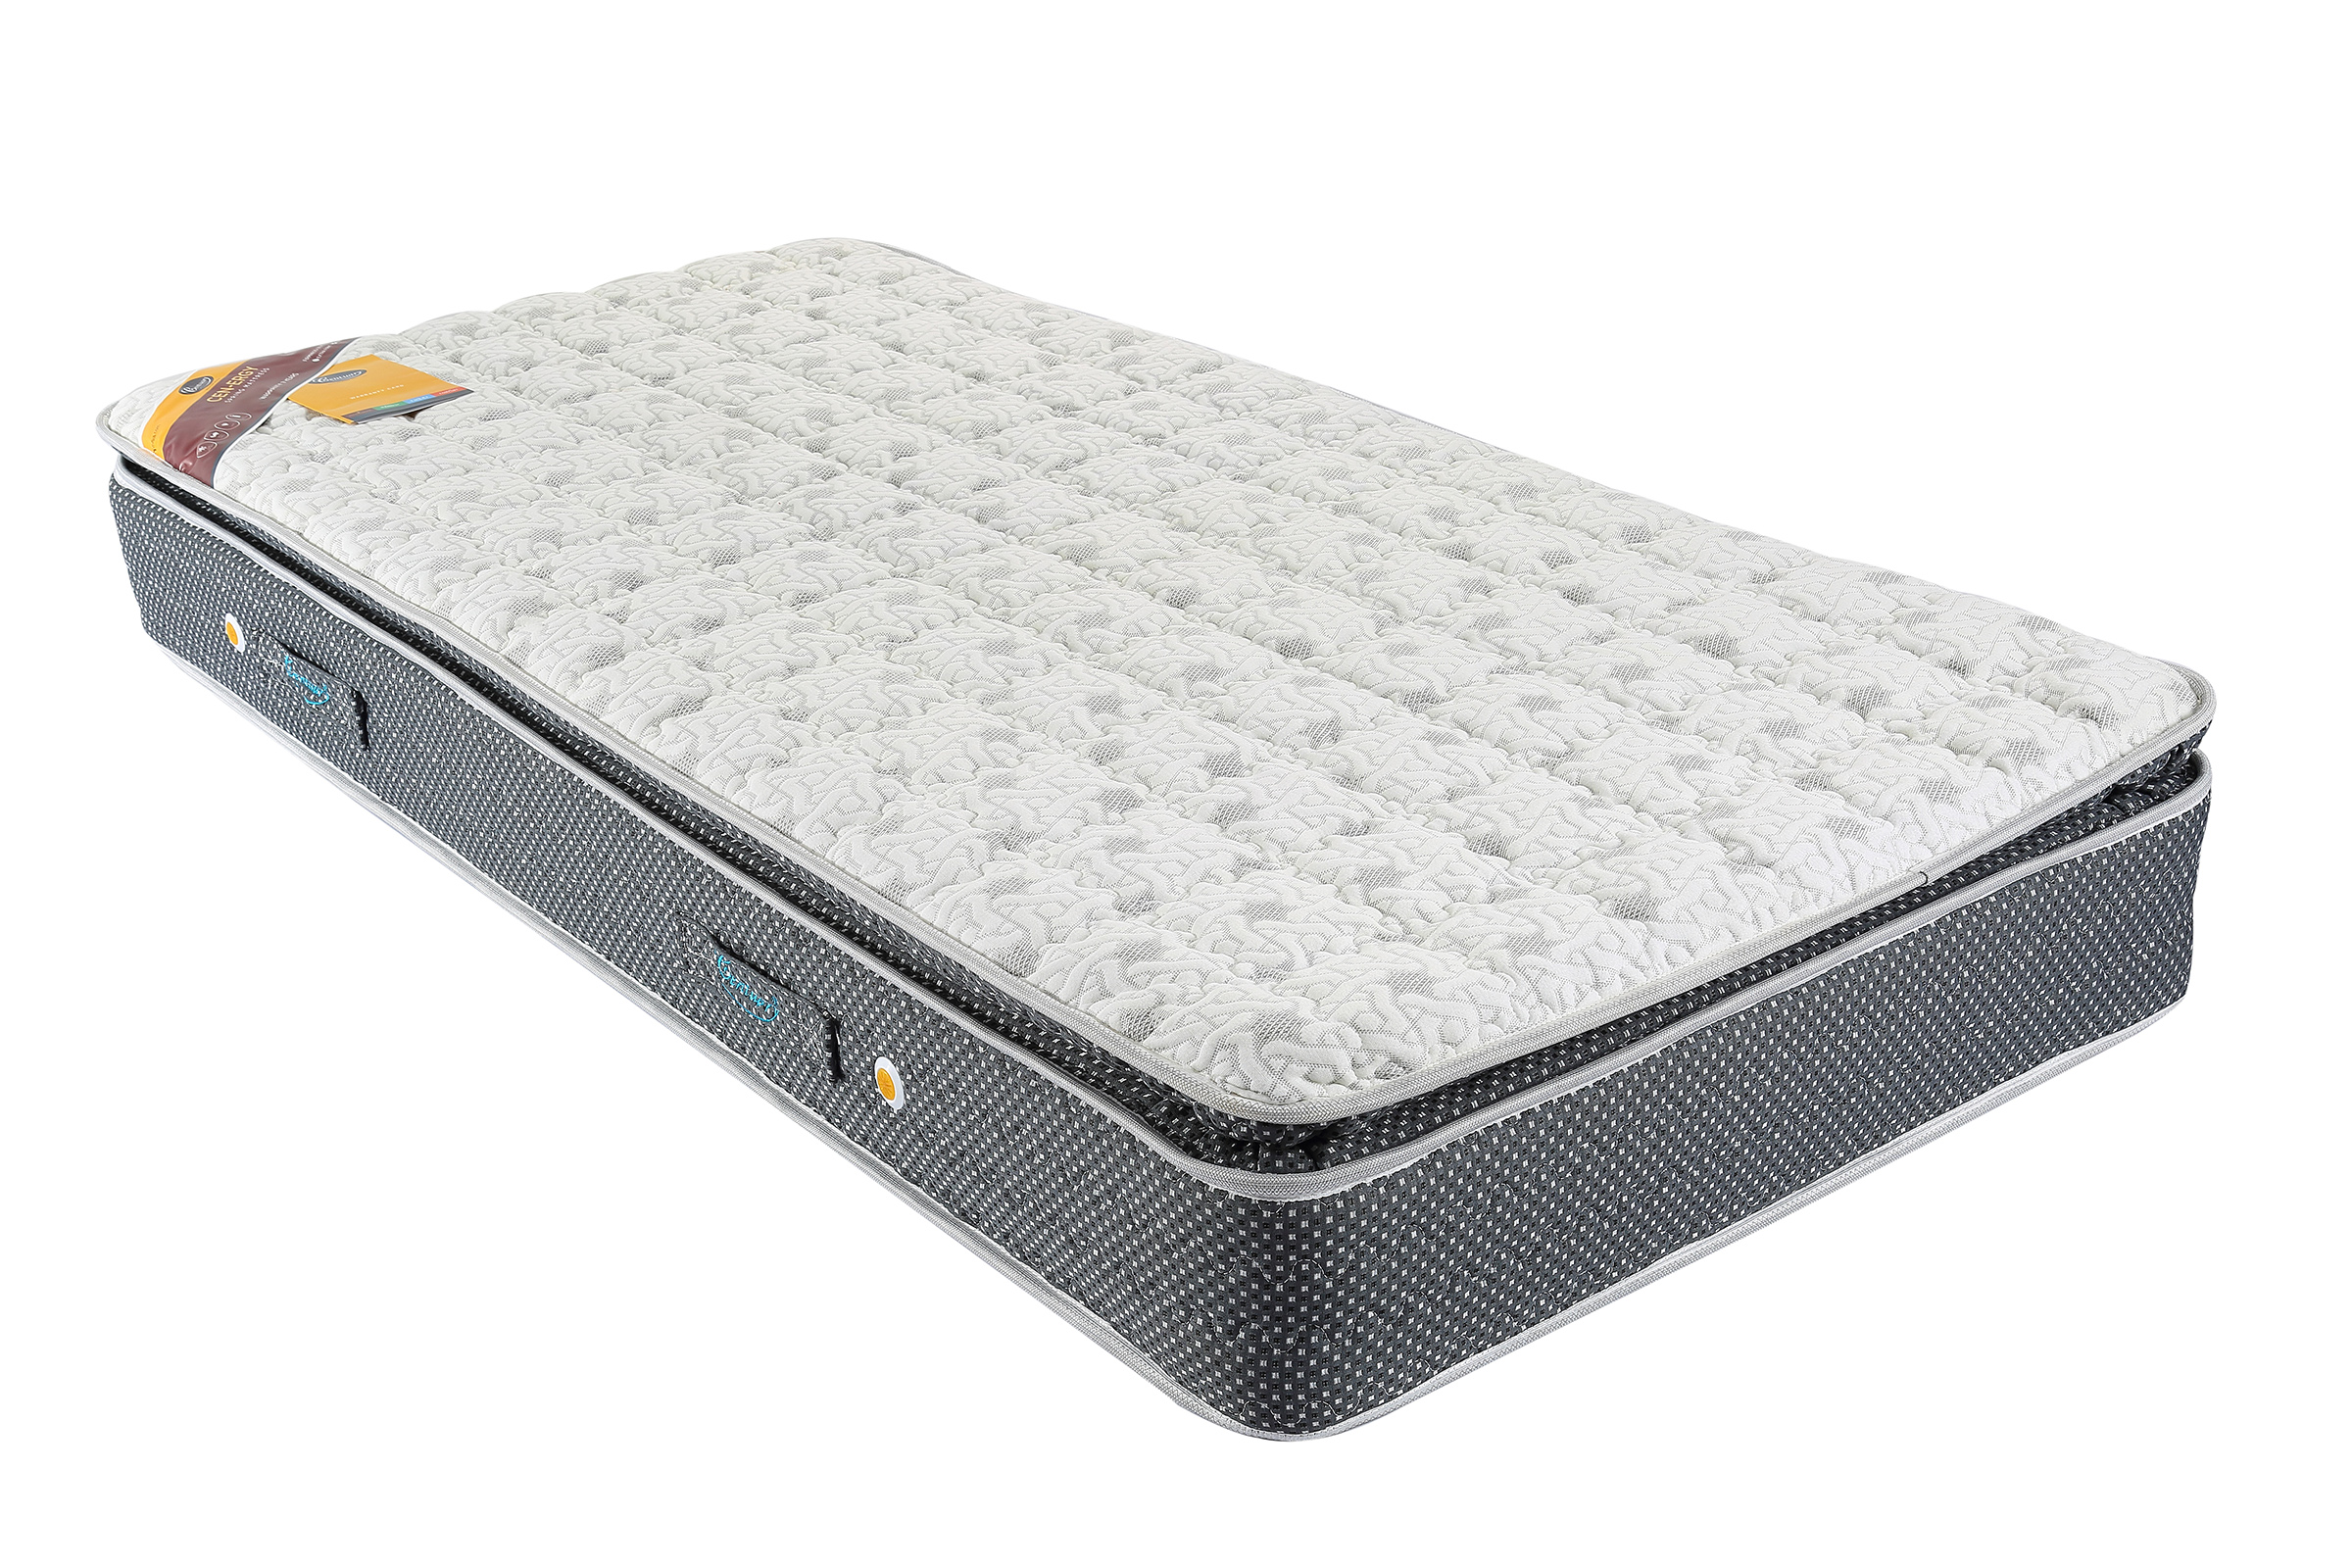 centuary mattress single bed